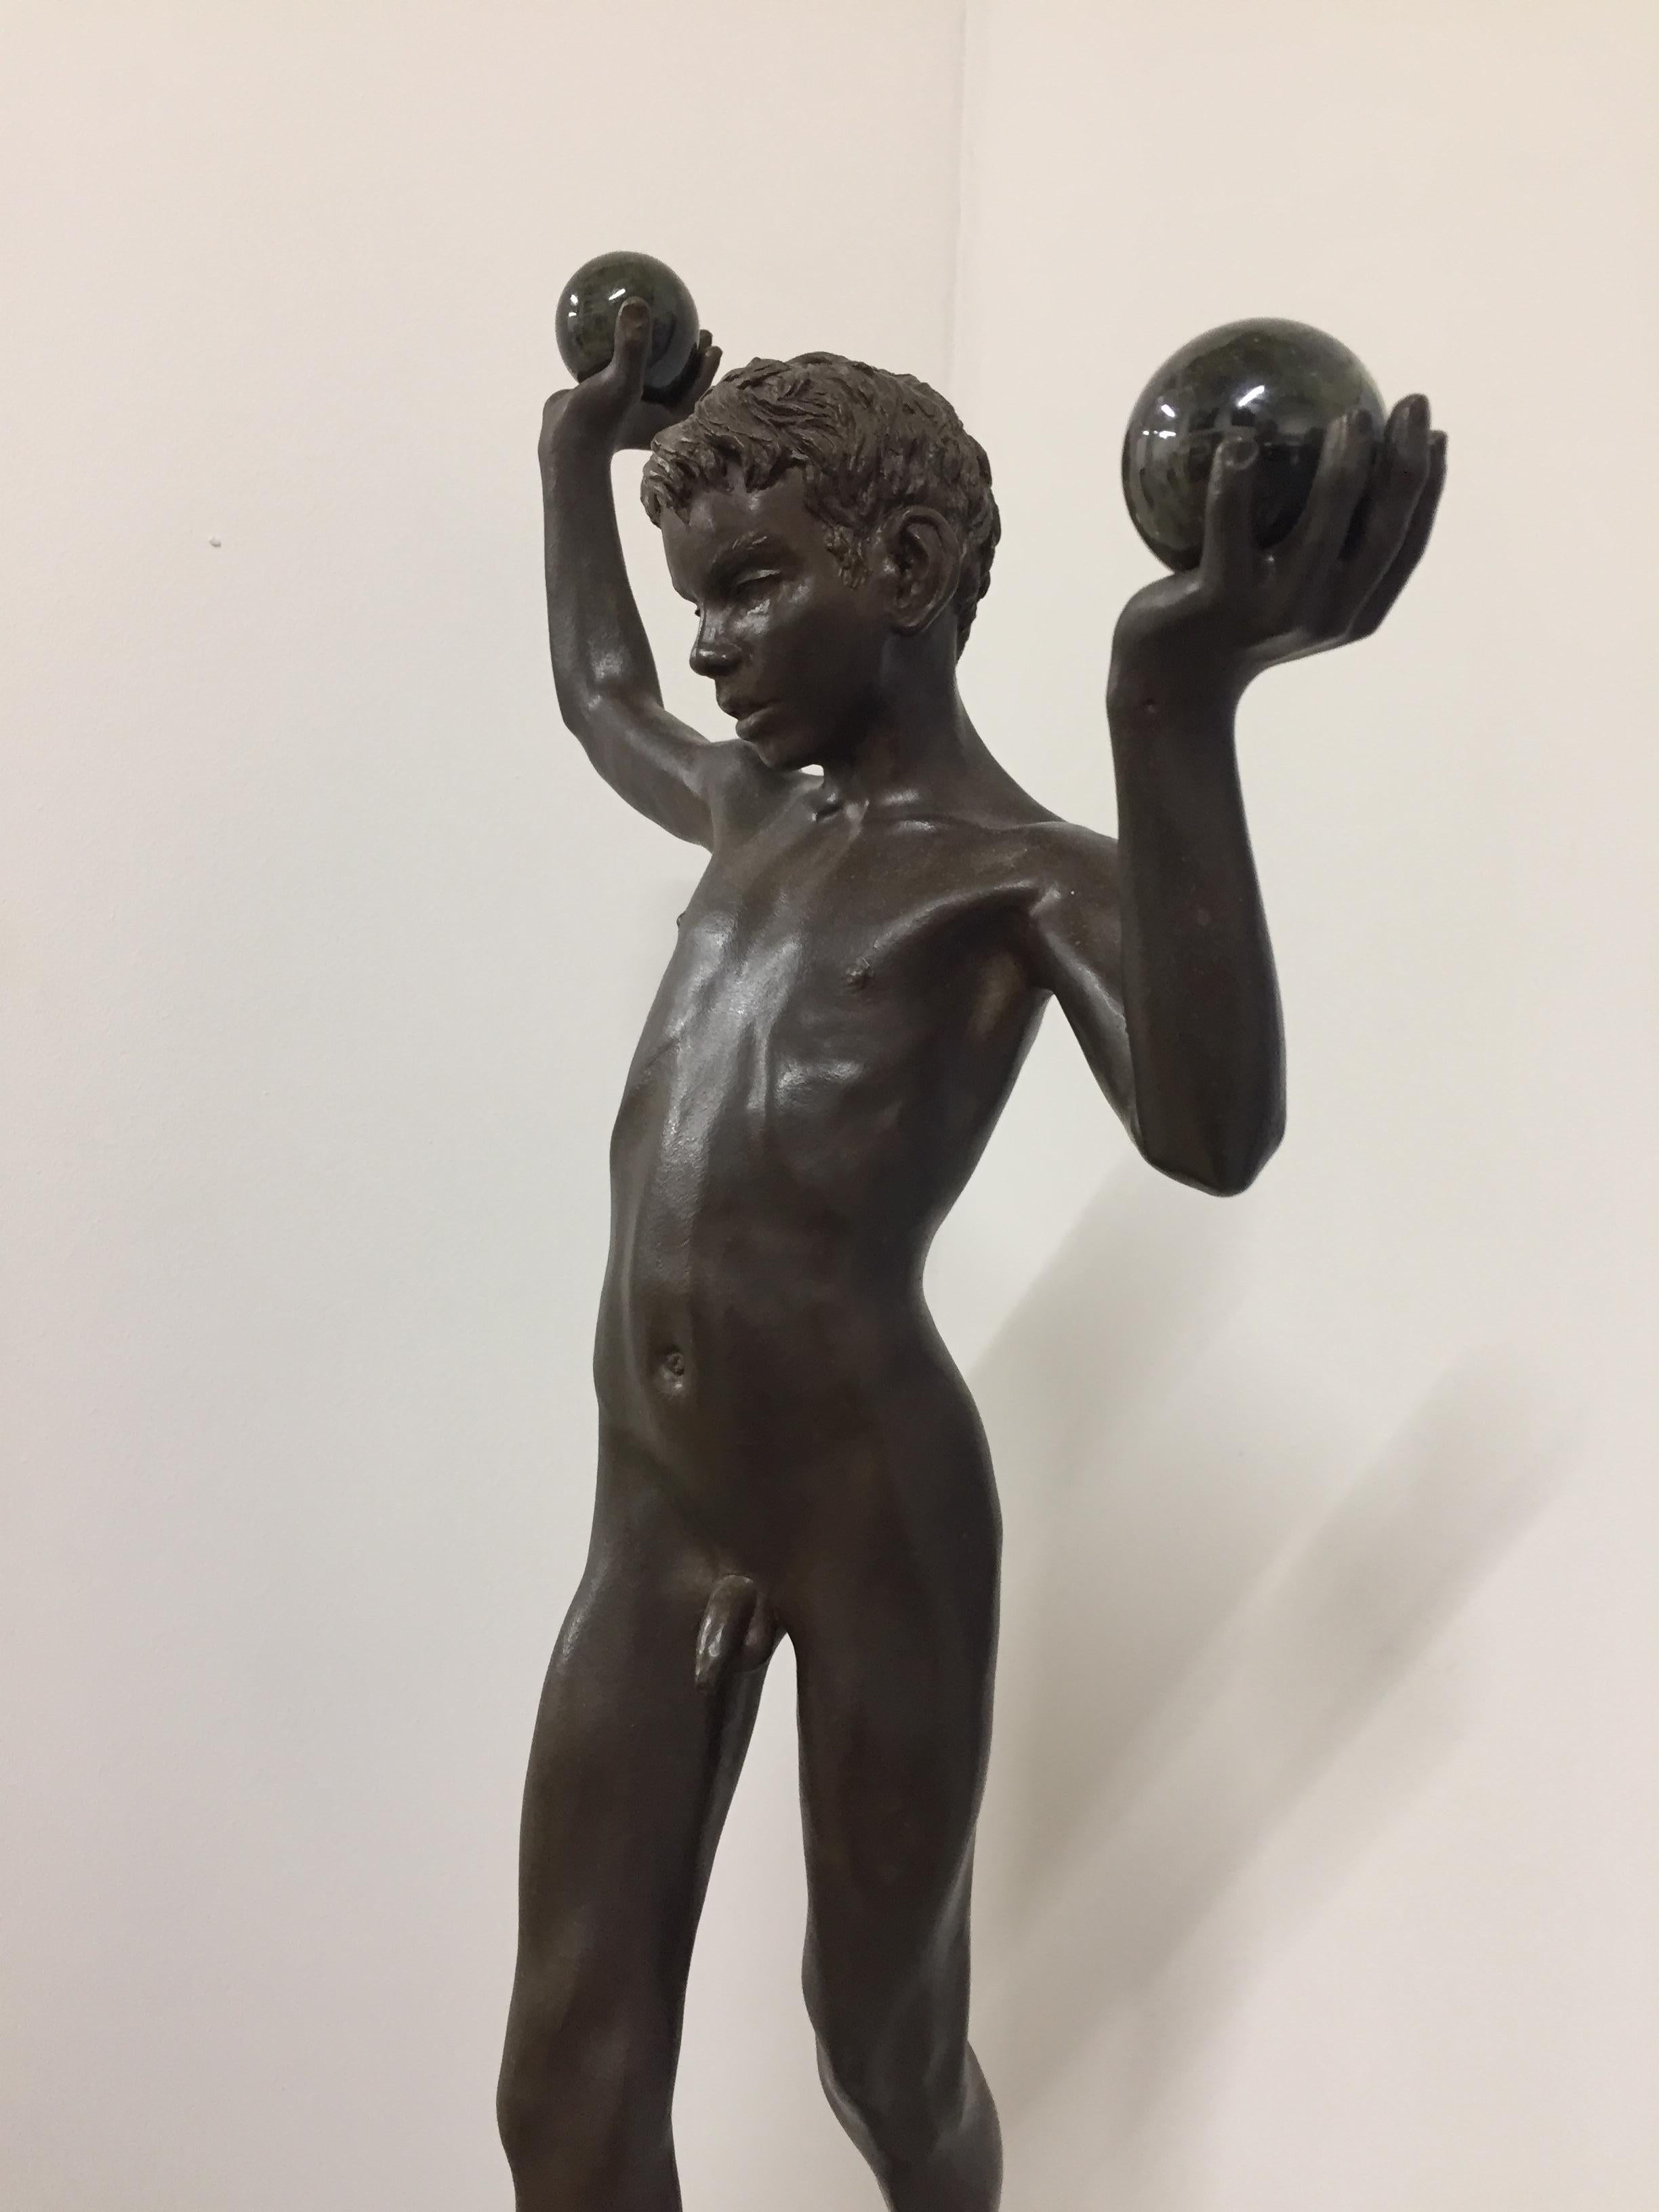 Wim van der Kant Nude Sculpture - Tollit, 21st Century Contemporary Bronze Sculpture of a nude boy